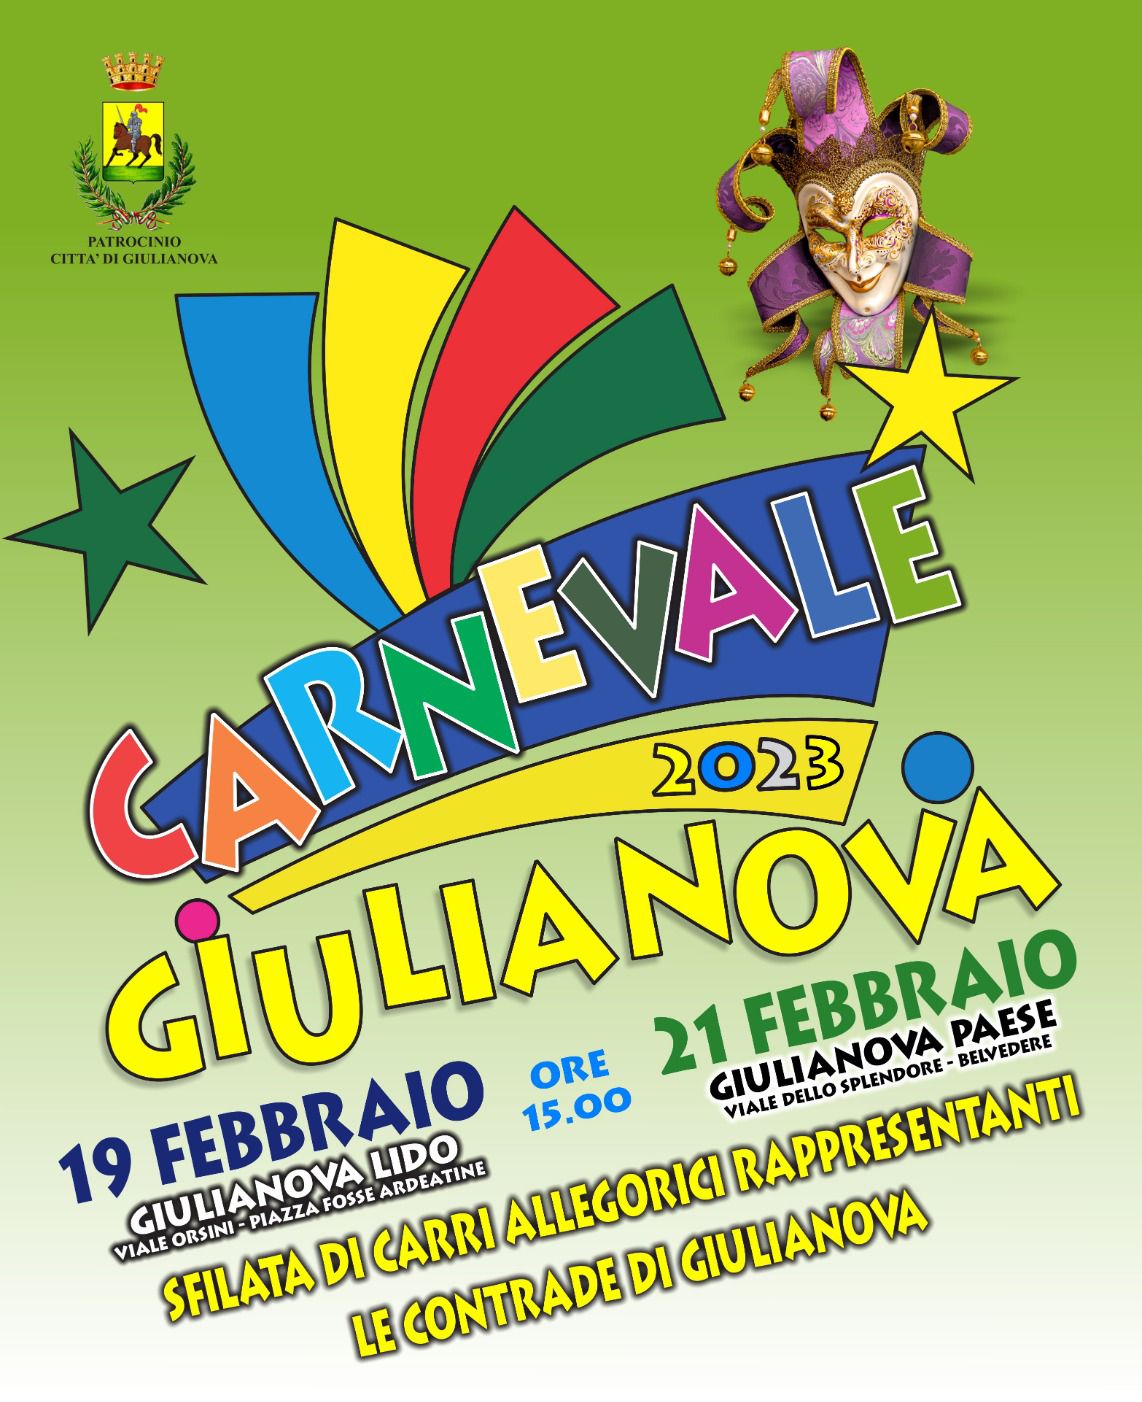 Carnevale Giulianova